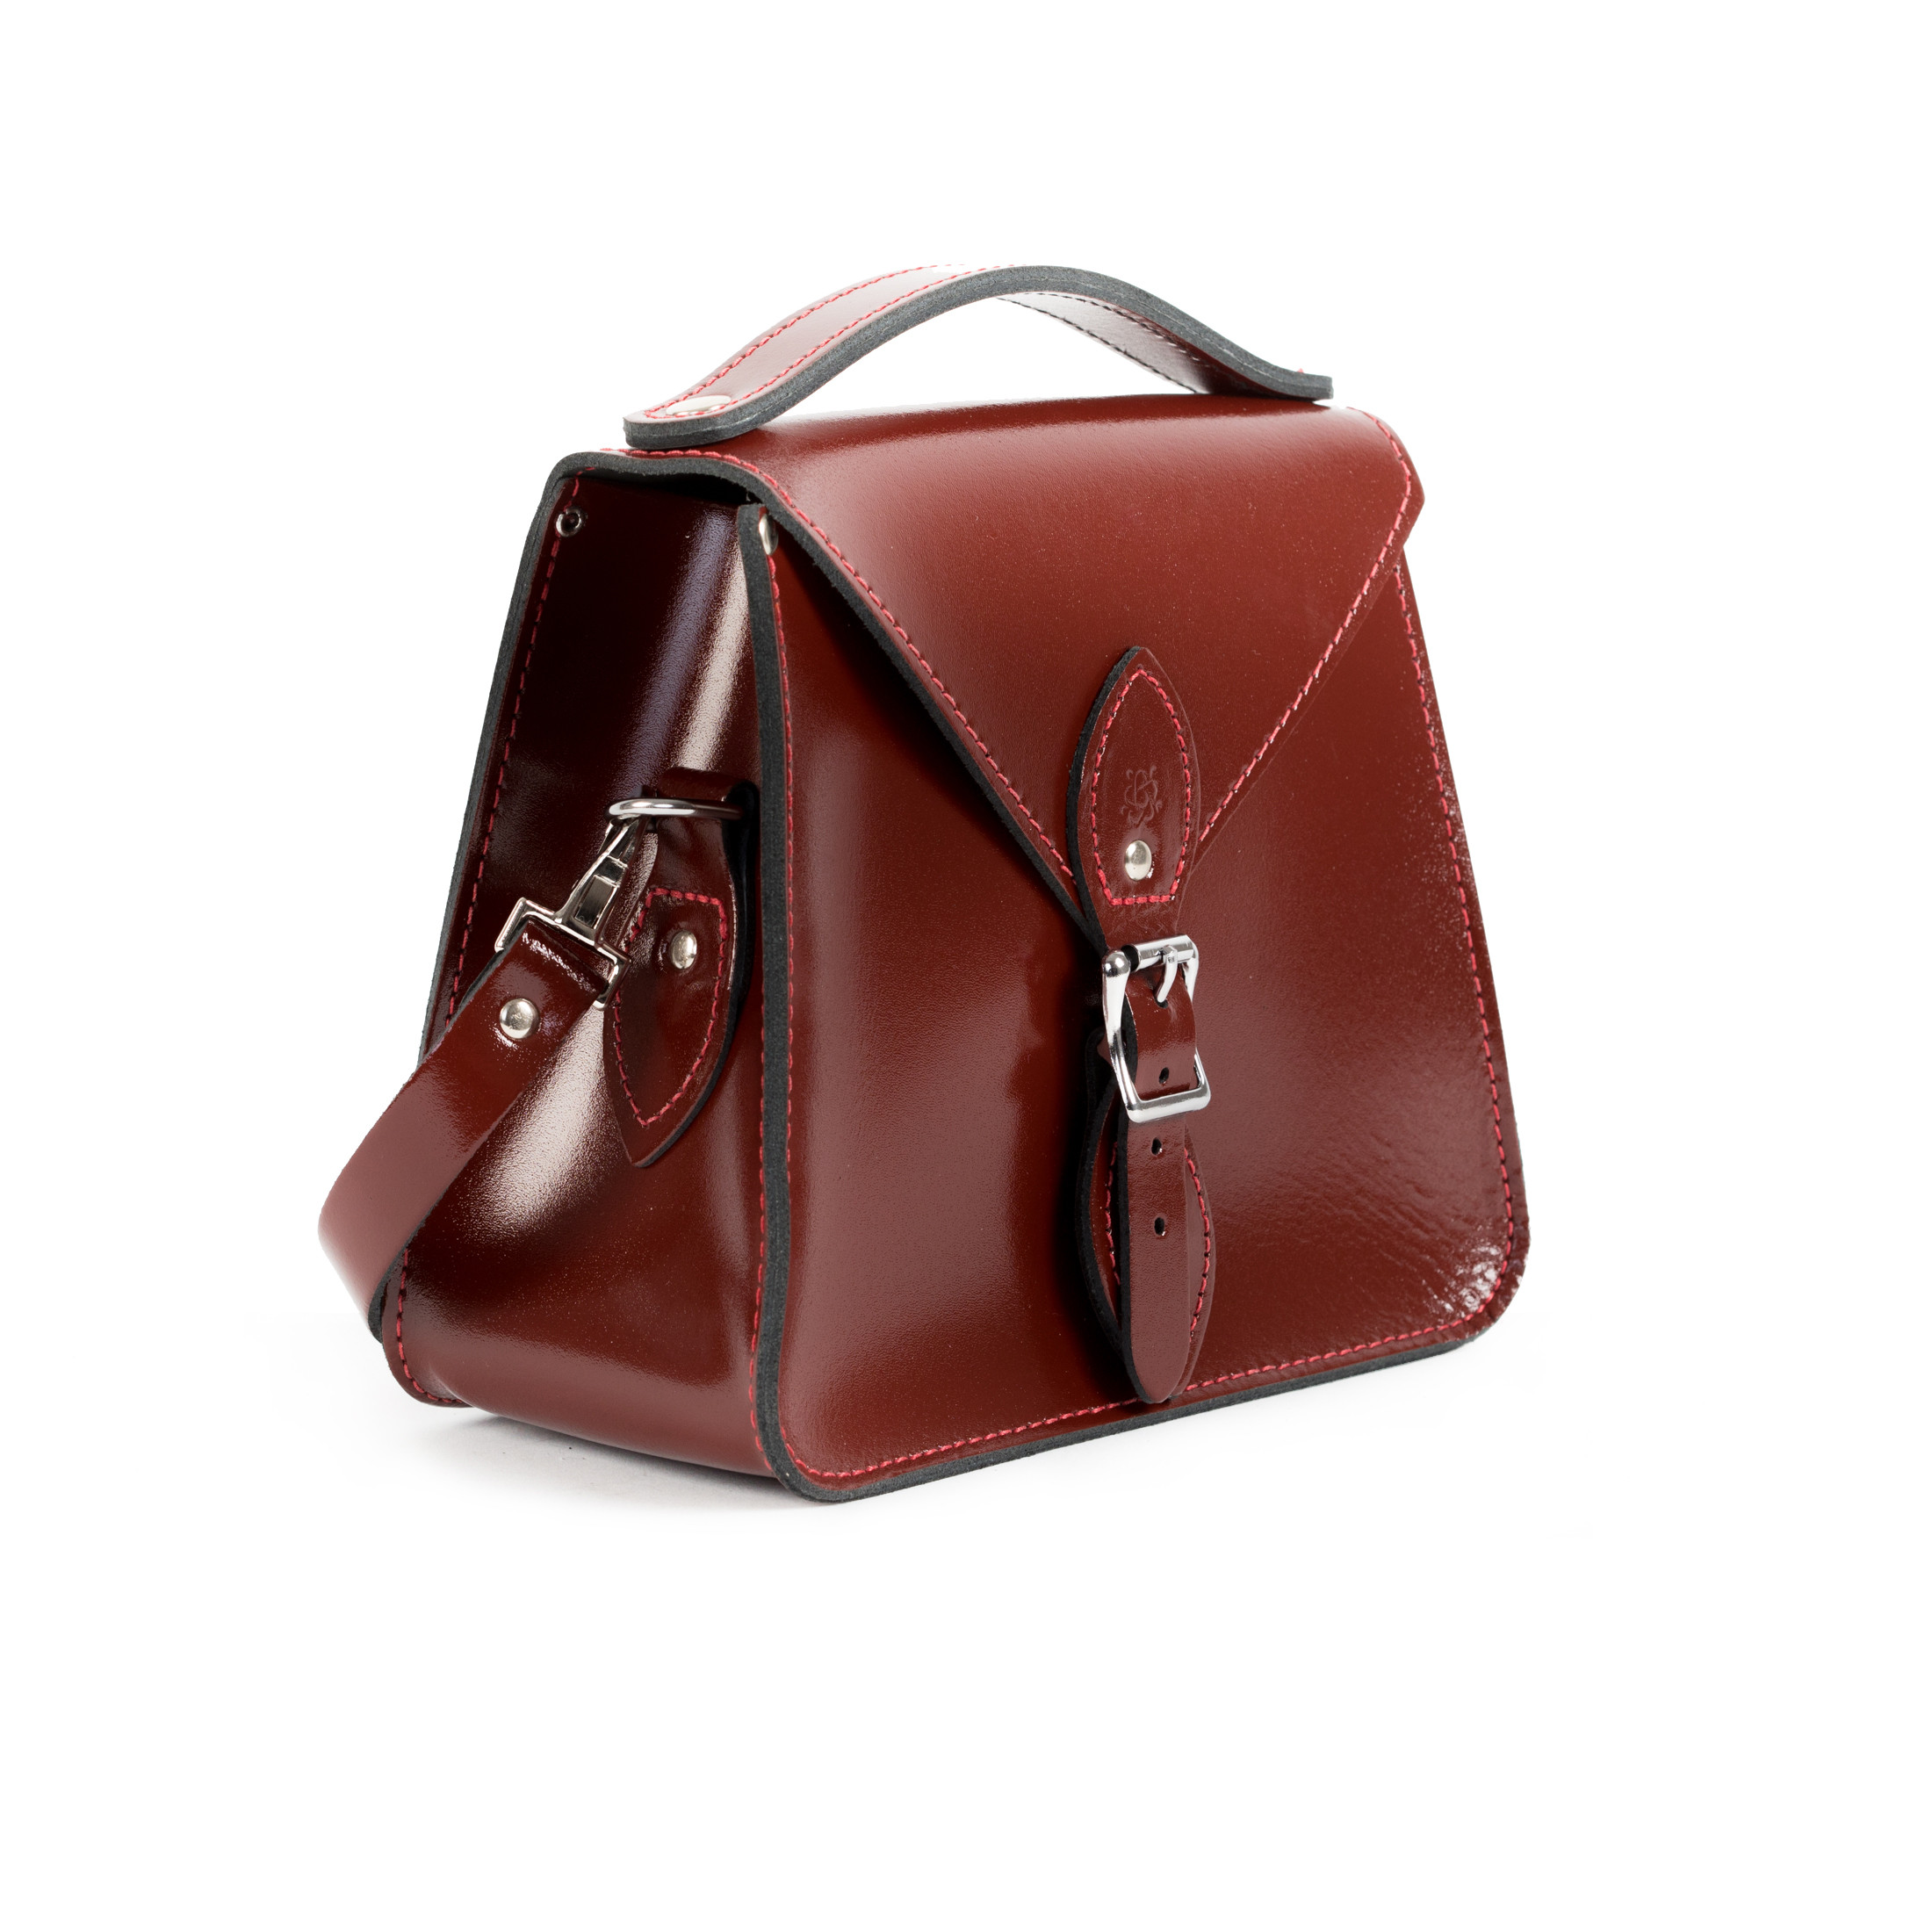 Esme Premium Leather Crossbody Bag in Oxblood Patent 